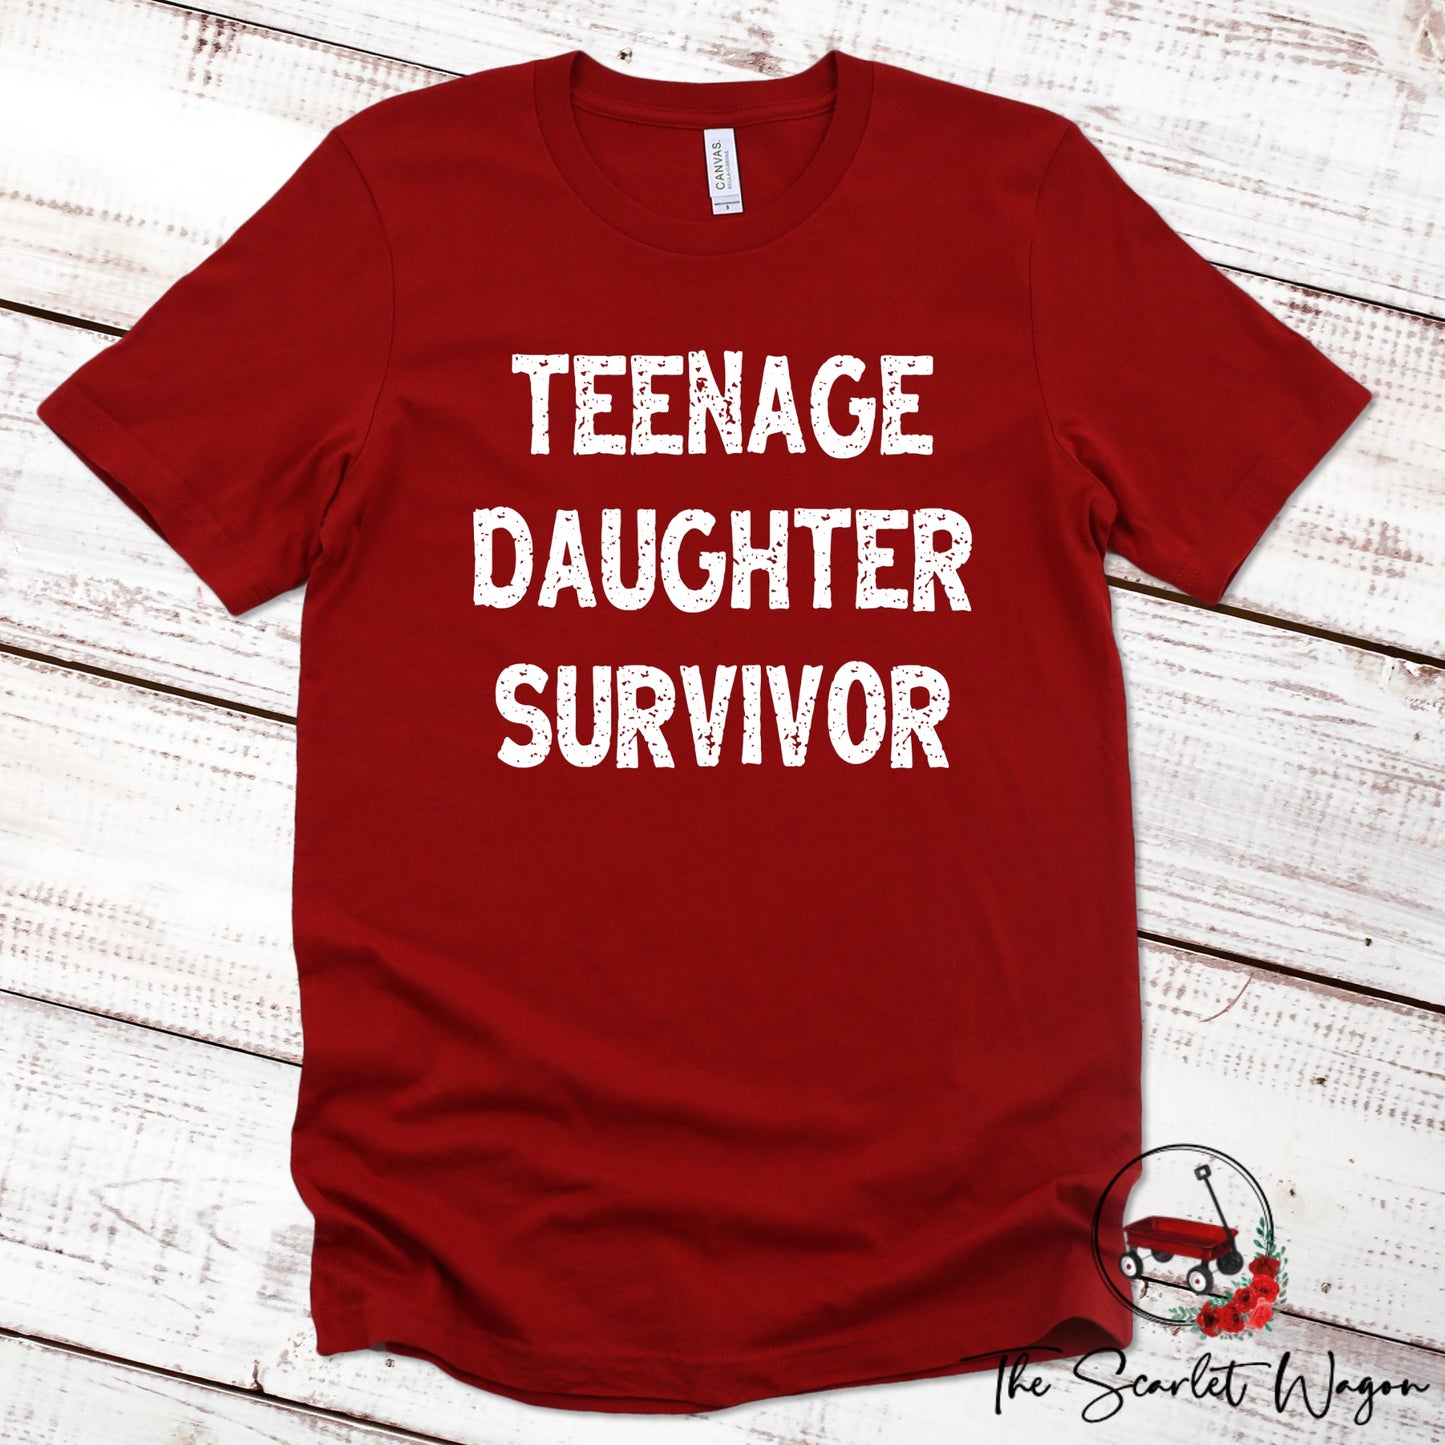 Teenage Daughter Survivor Premium Tee Scarlet Wagon Red XS 